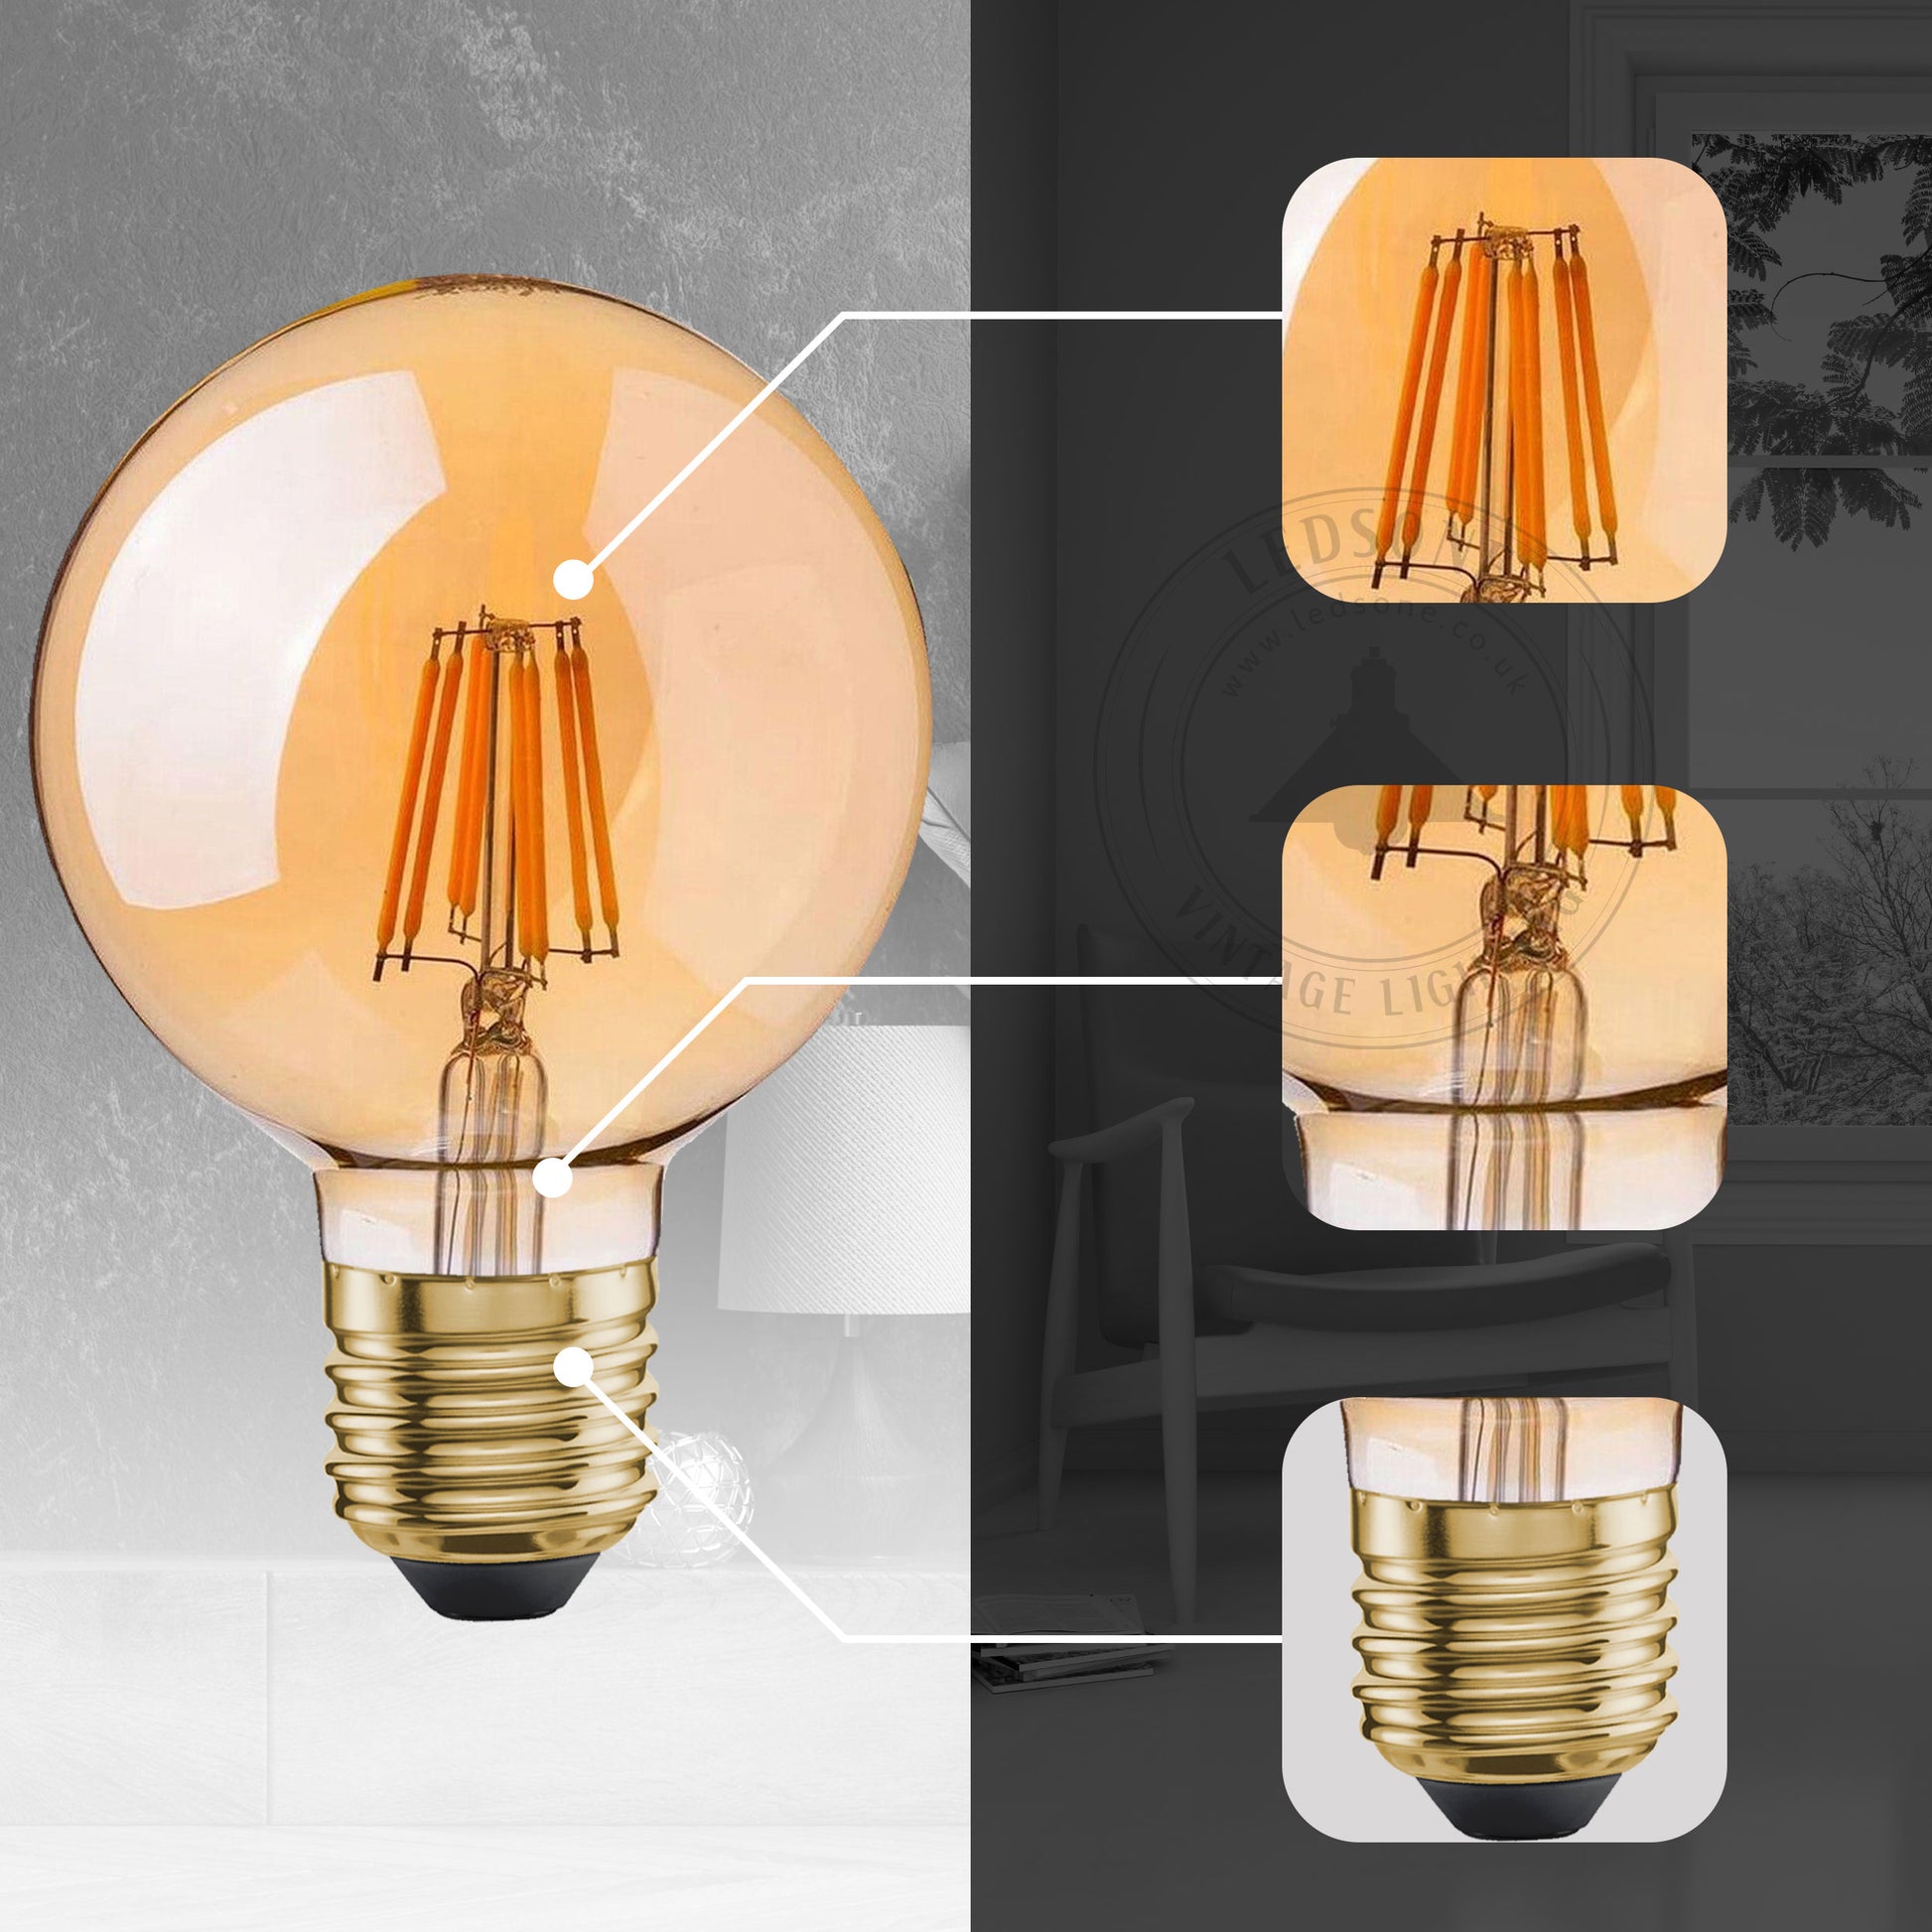 Dimmable E27 LED Bulb (8W)